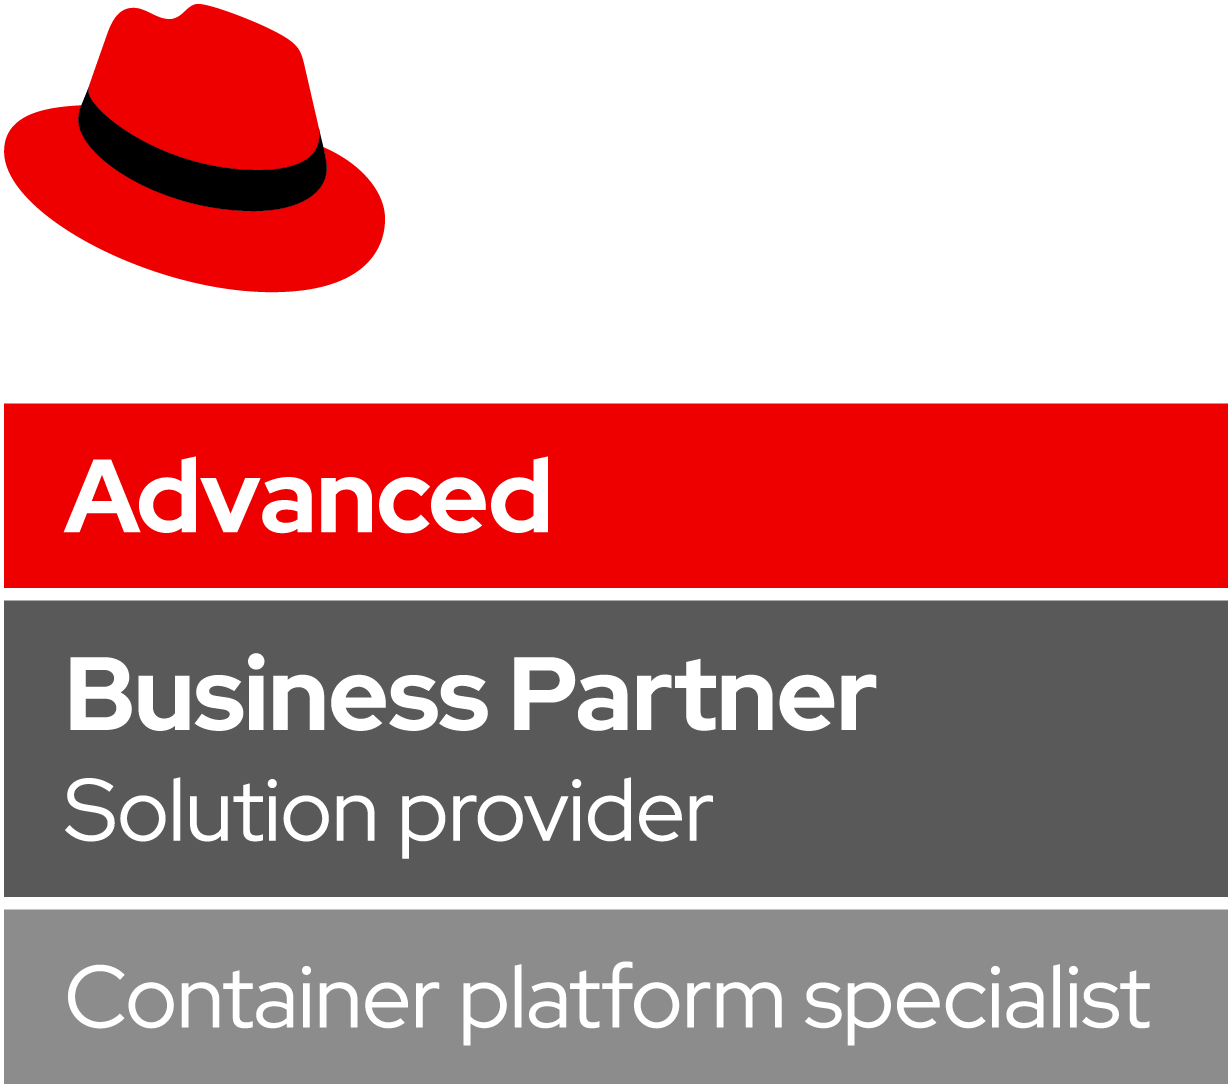 Logo-Red_Hat-Advanced_Bus_Partner-Sol_Prov-Container_platform_specialist-A